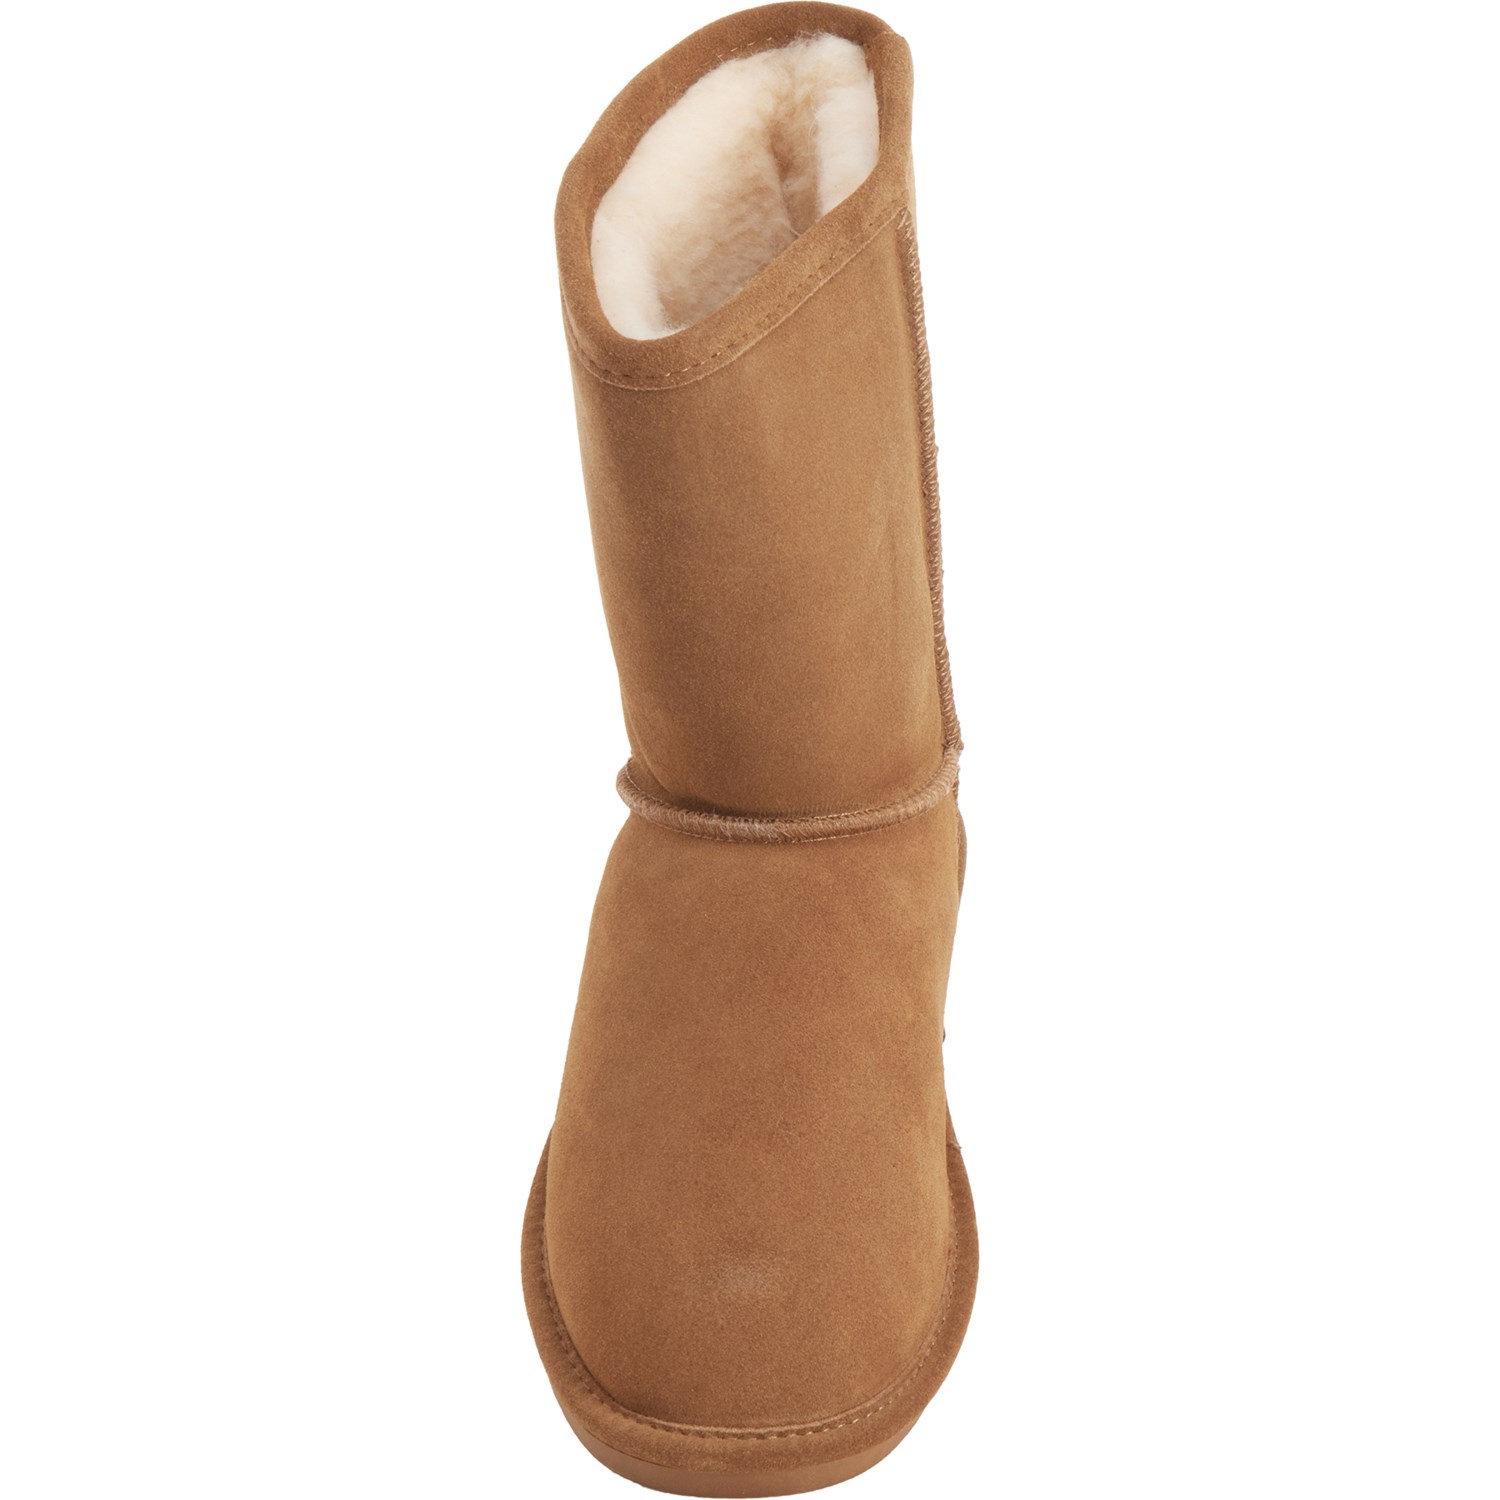 Bearpaw Eva Short Boots (For Women) - Save 28%